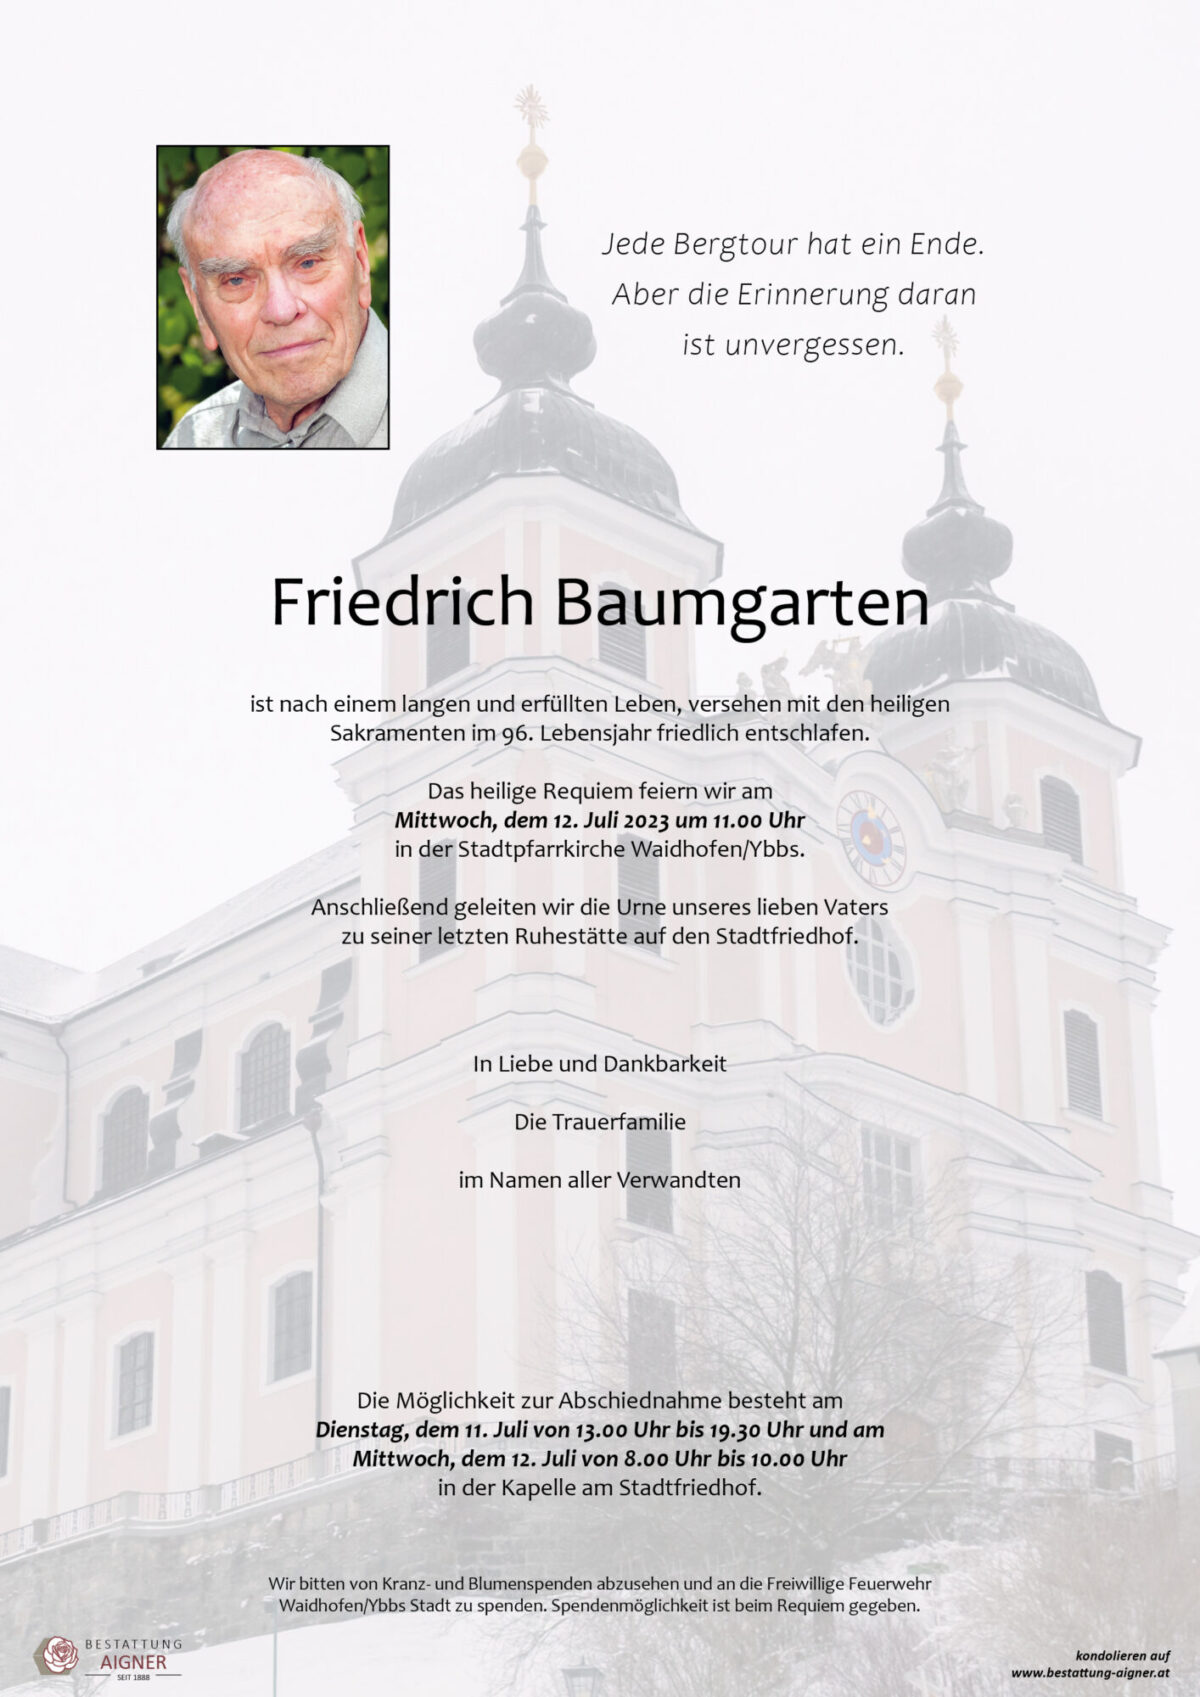 Friedrich Baumgarten